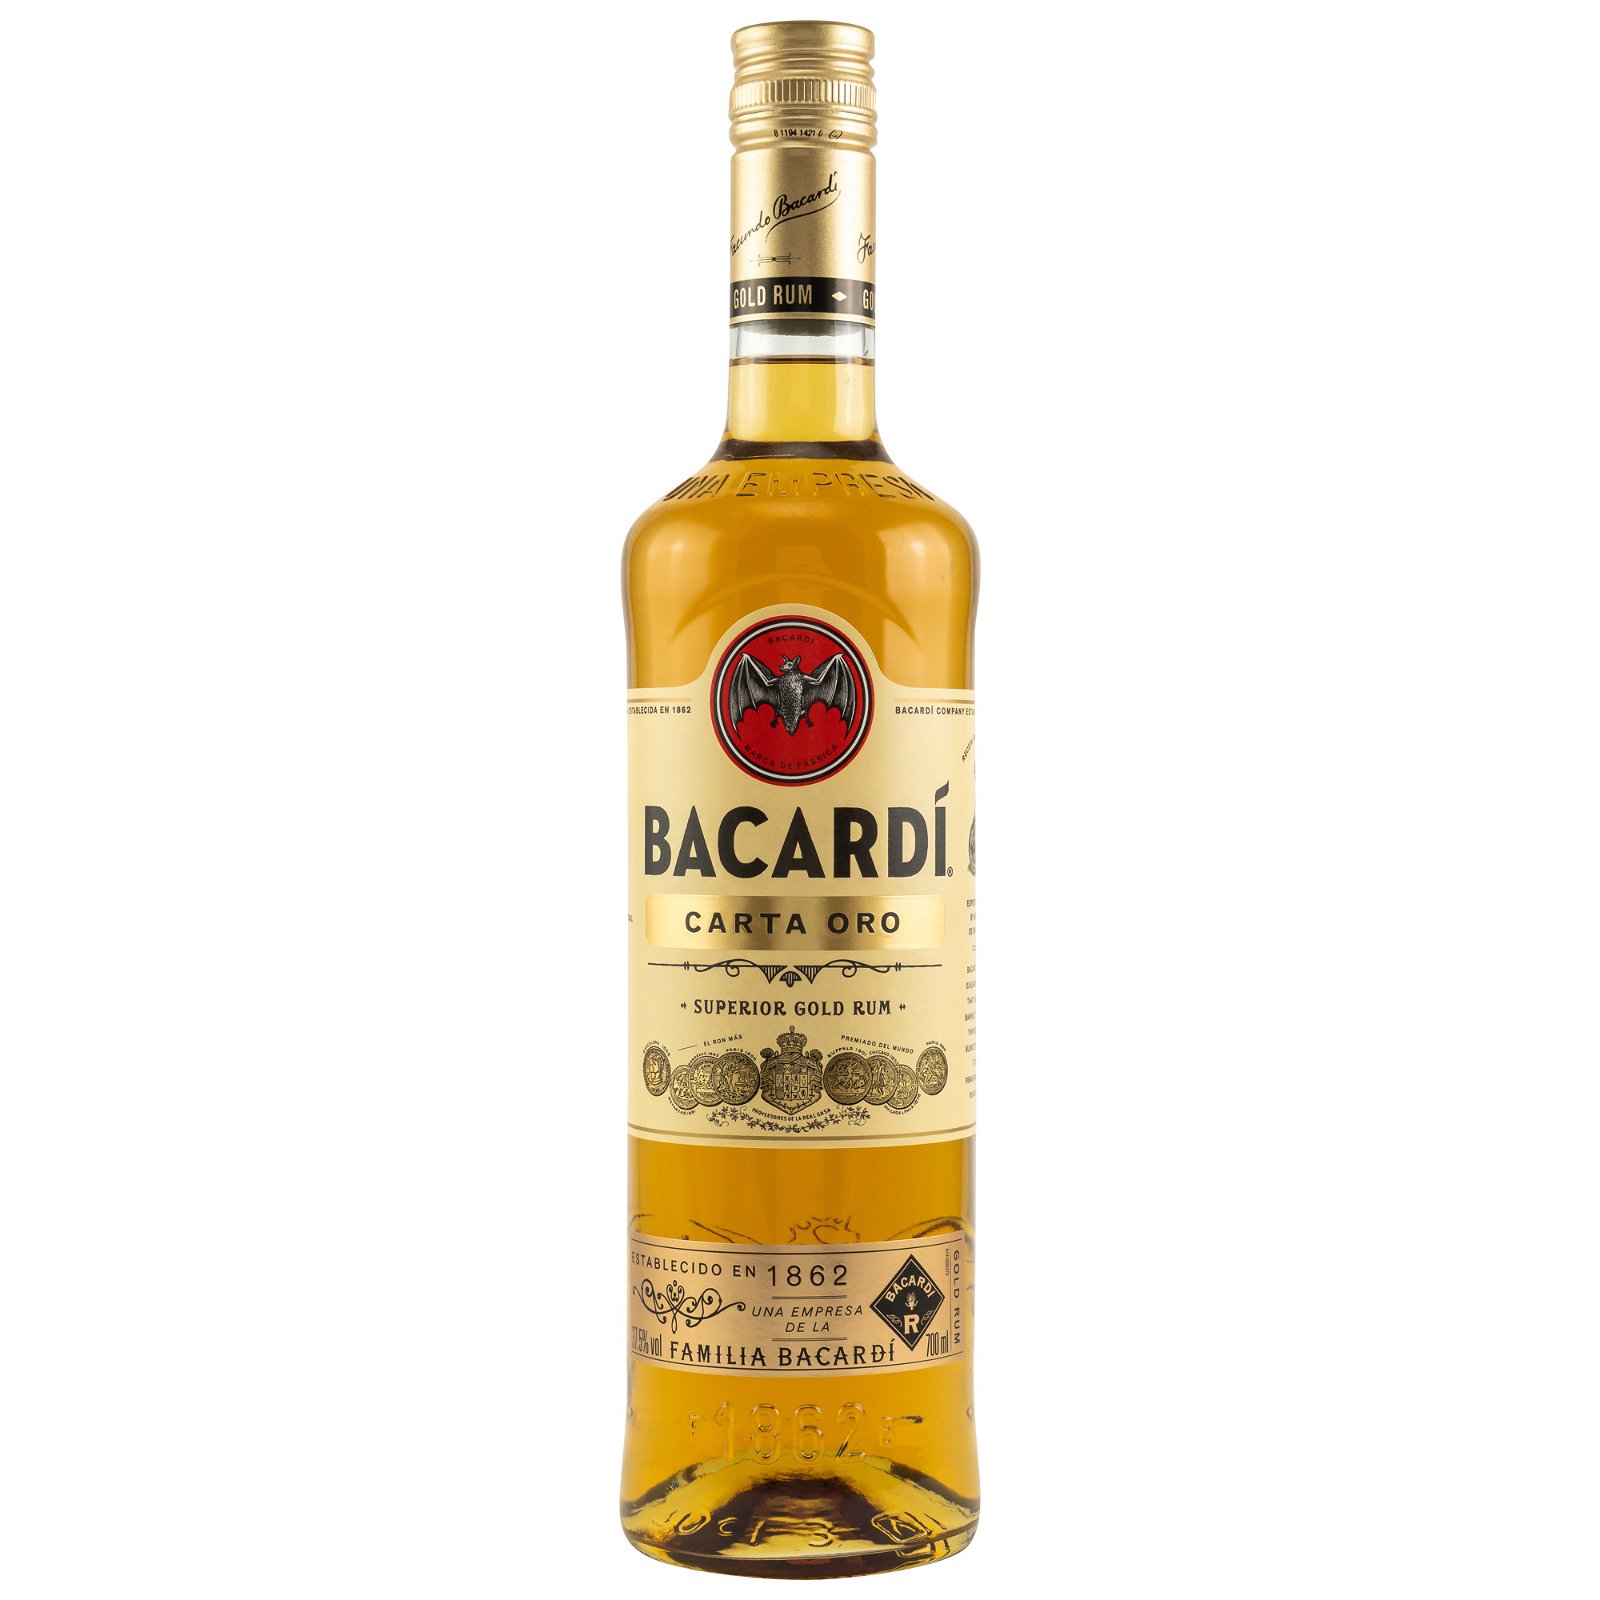 Bacardi Carta Oro Superior Gold Rum (Bahamas)